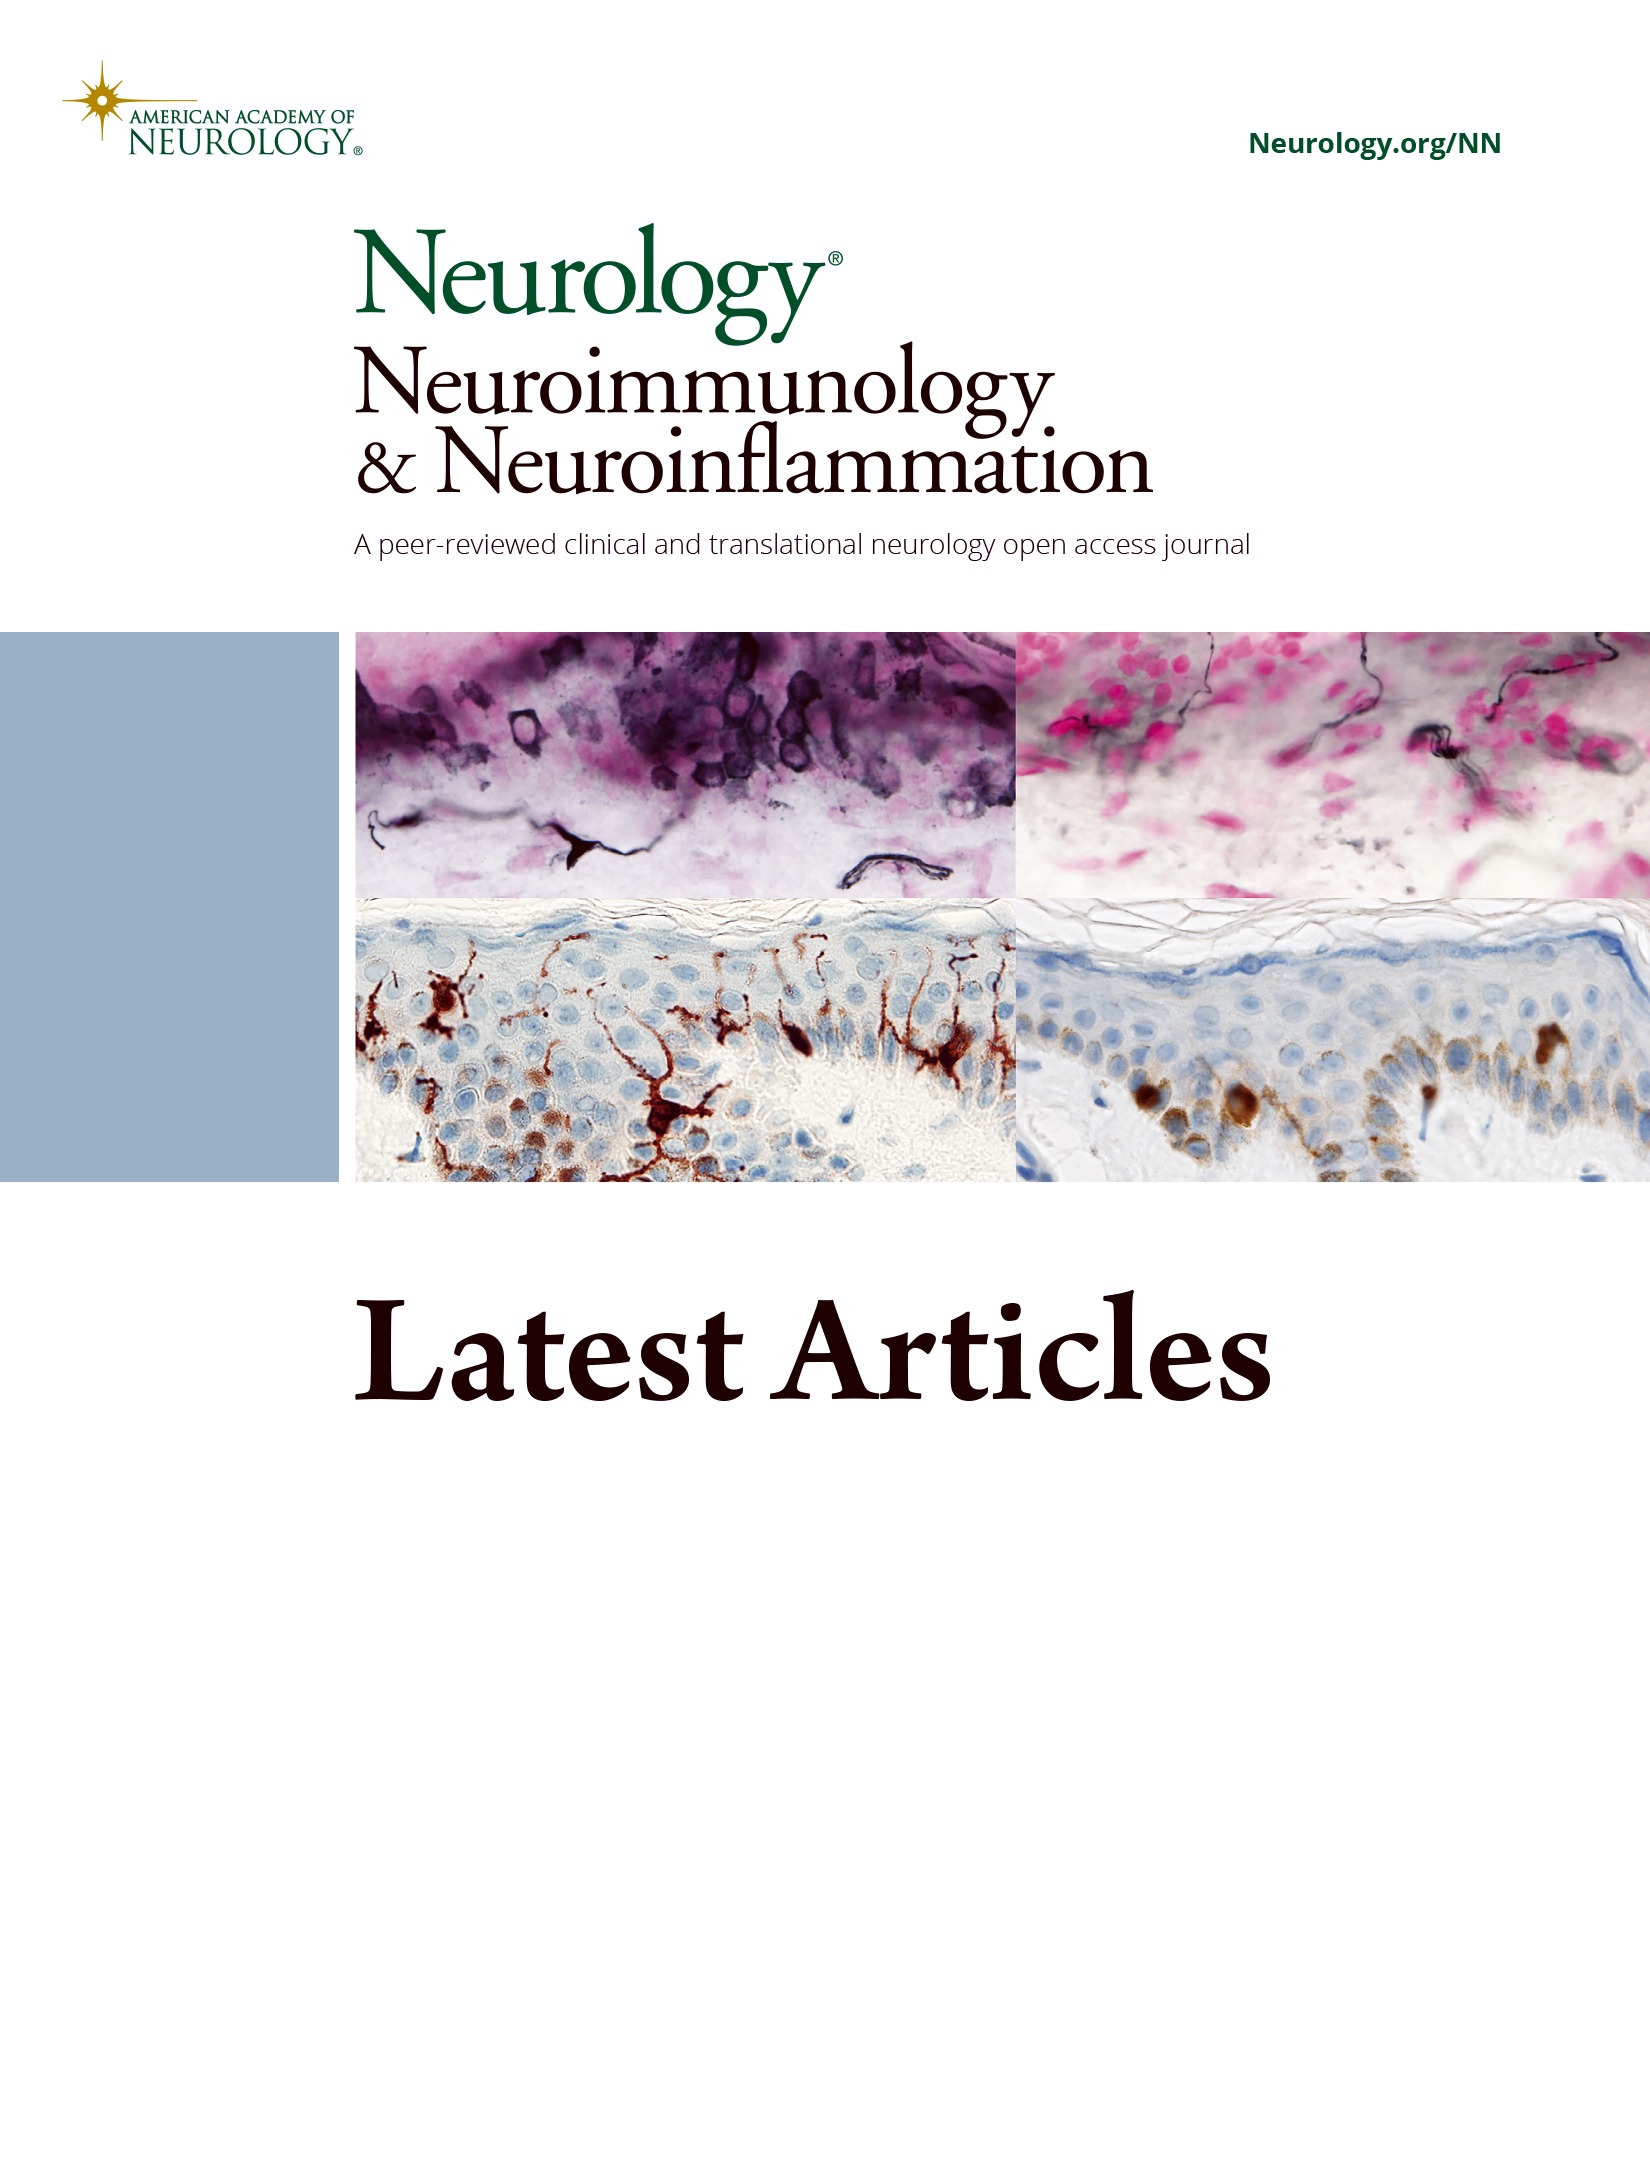 Early Neuroaxonal Damage in Neurologic Disorders Associated With GAD65 Antibodies